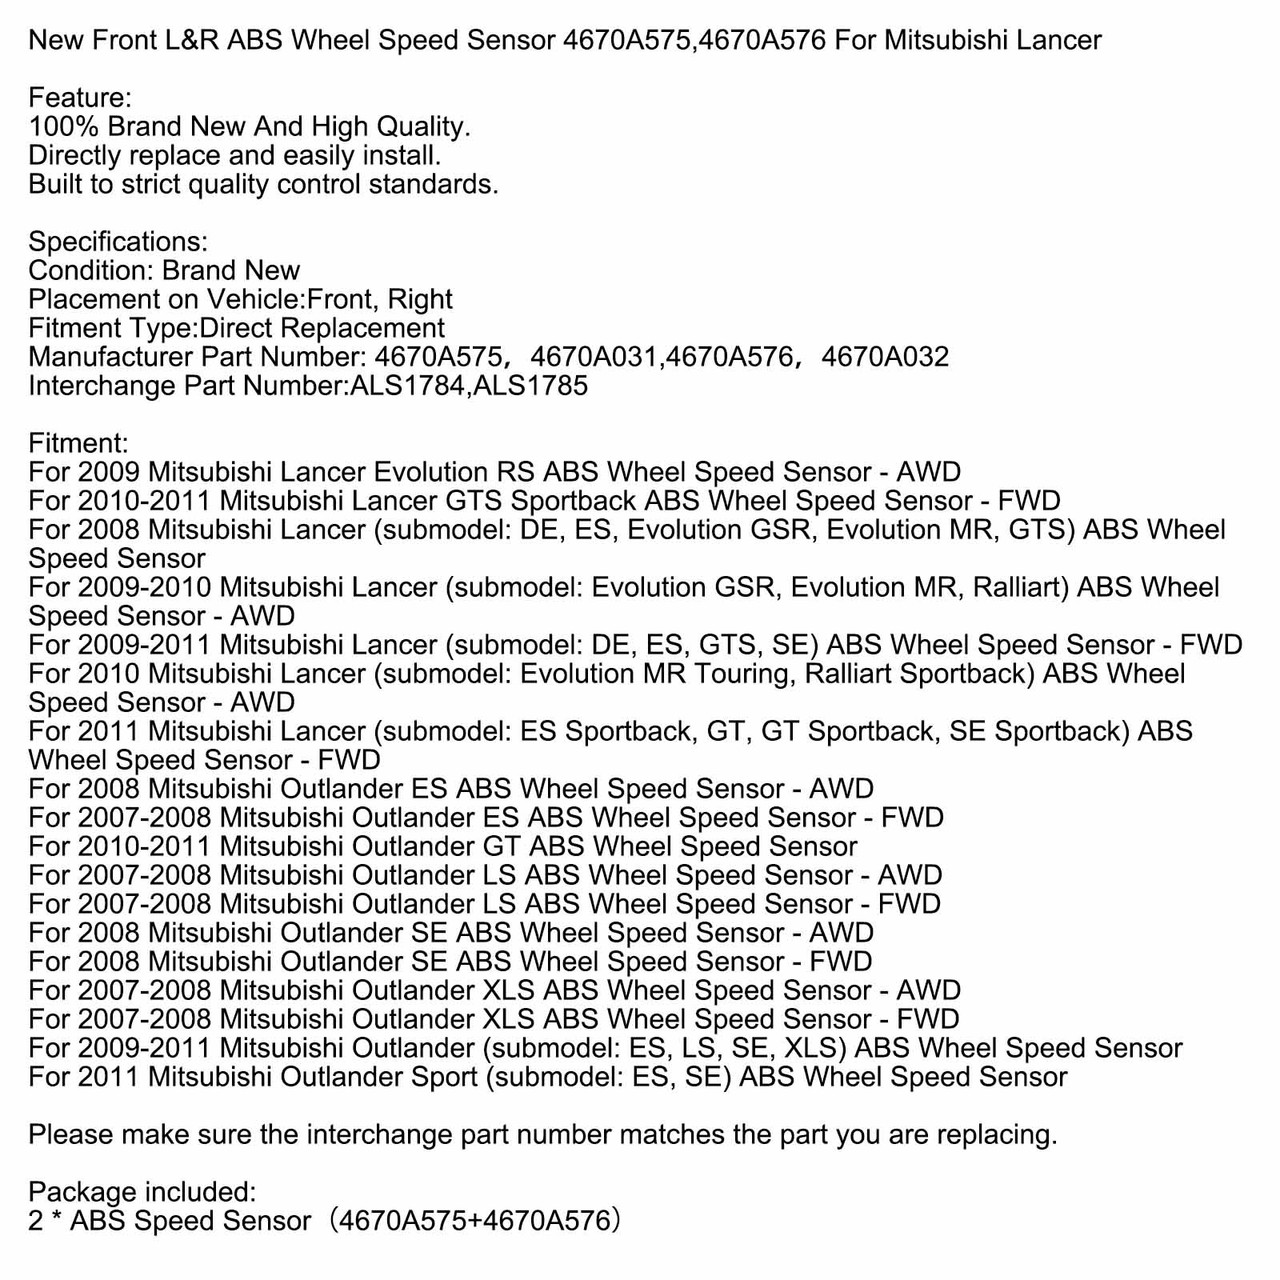 Front L&R ABS Wheel Speed Sensor 4670A575 4670A576 Fit for Mitsubishi Lancer GTS Sportback 10-11 Outlander ES LS XLS 07-08 GT 10-11